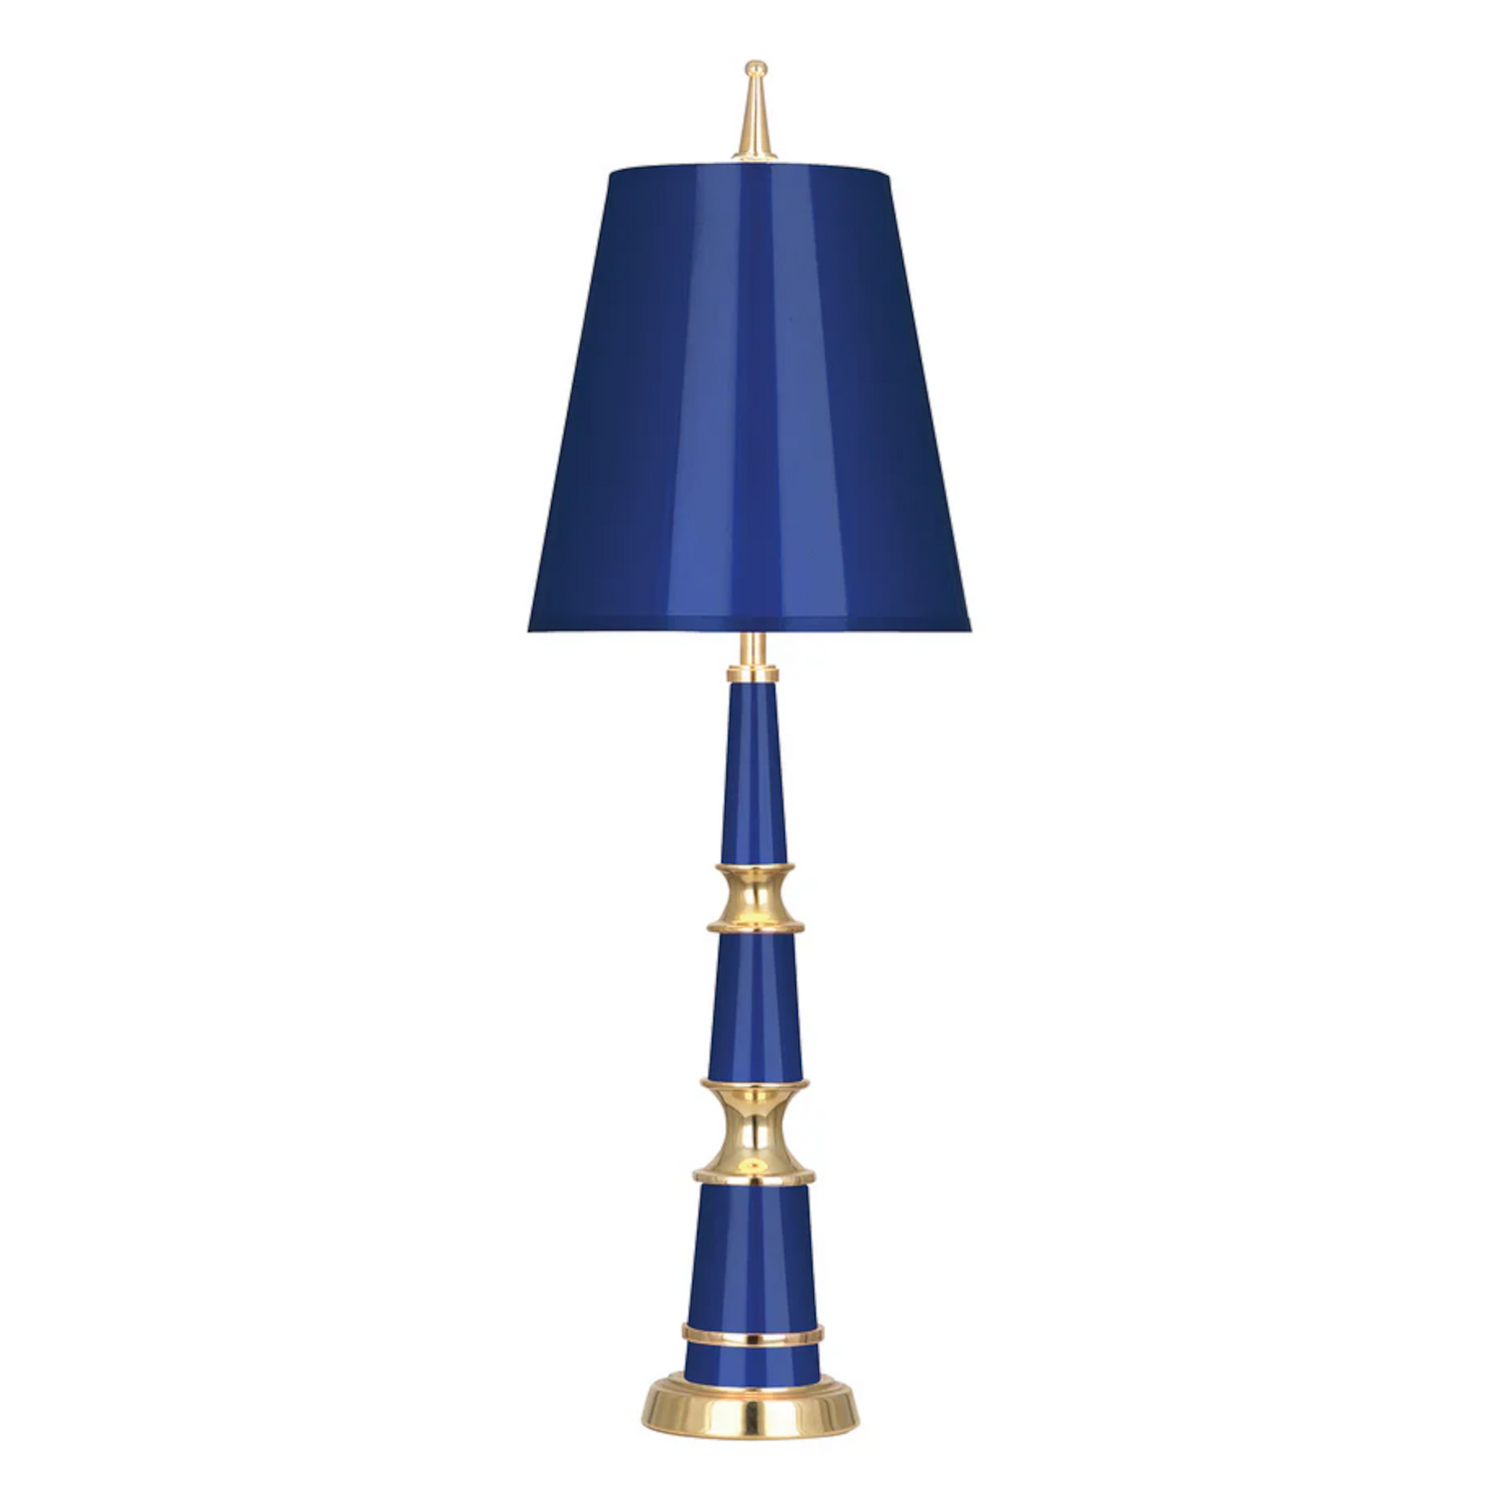 Table lamp VERSAILLES in navy blue